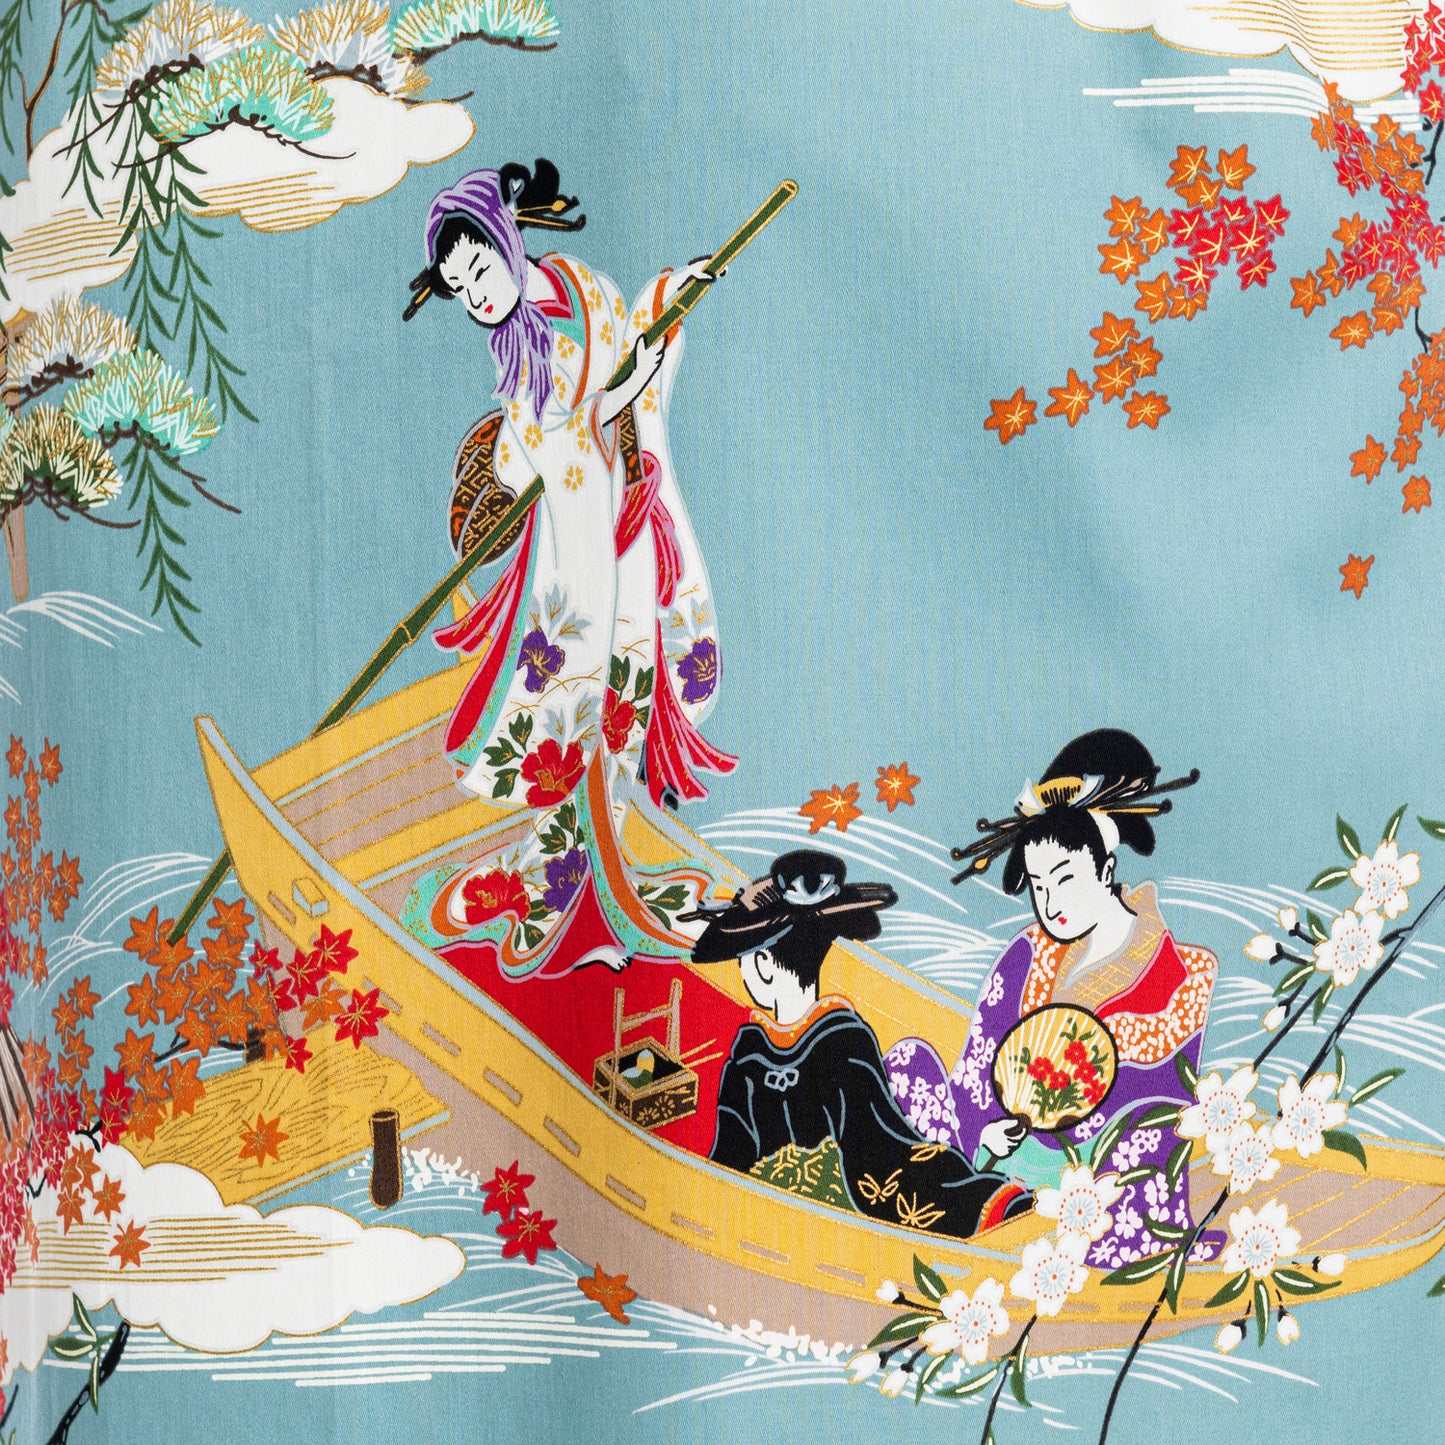 Geisha Long Blue Japanese Kimono